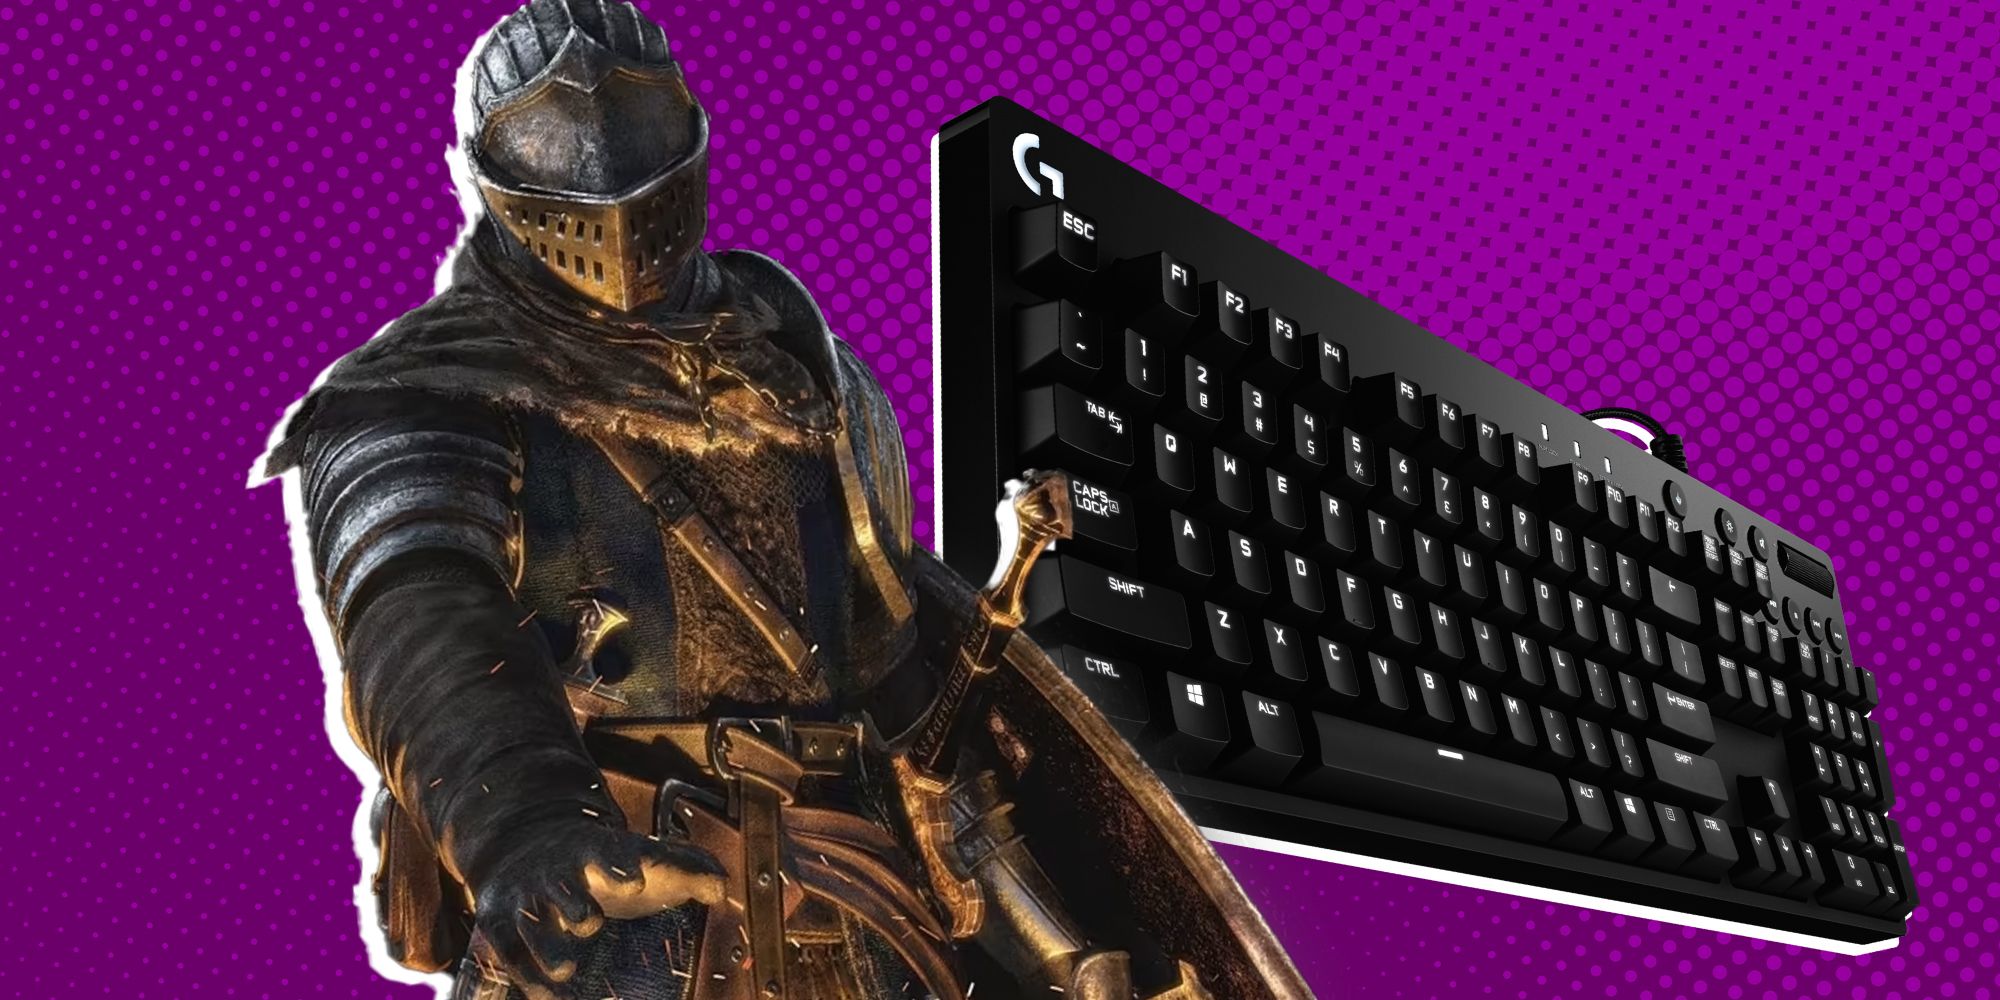 Dark Souls Chosen Undead over a purple background next to a keyboard